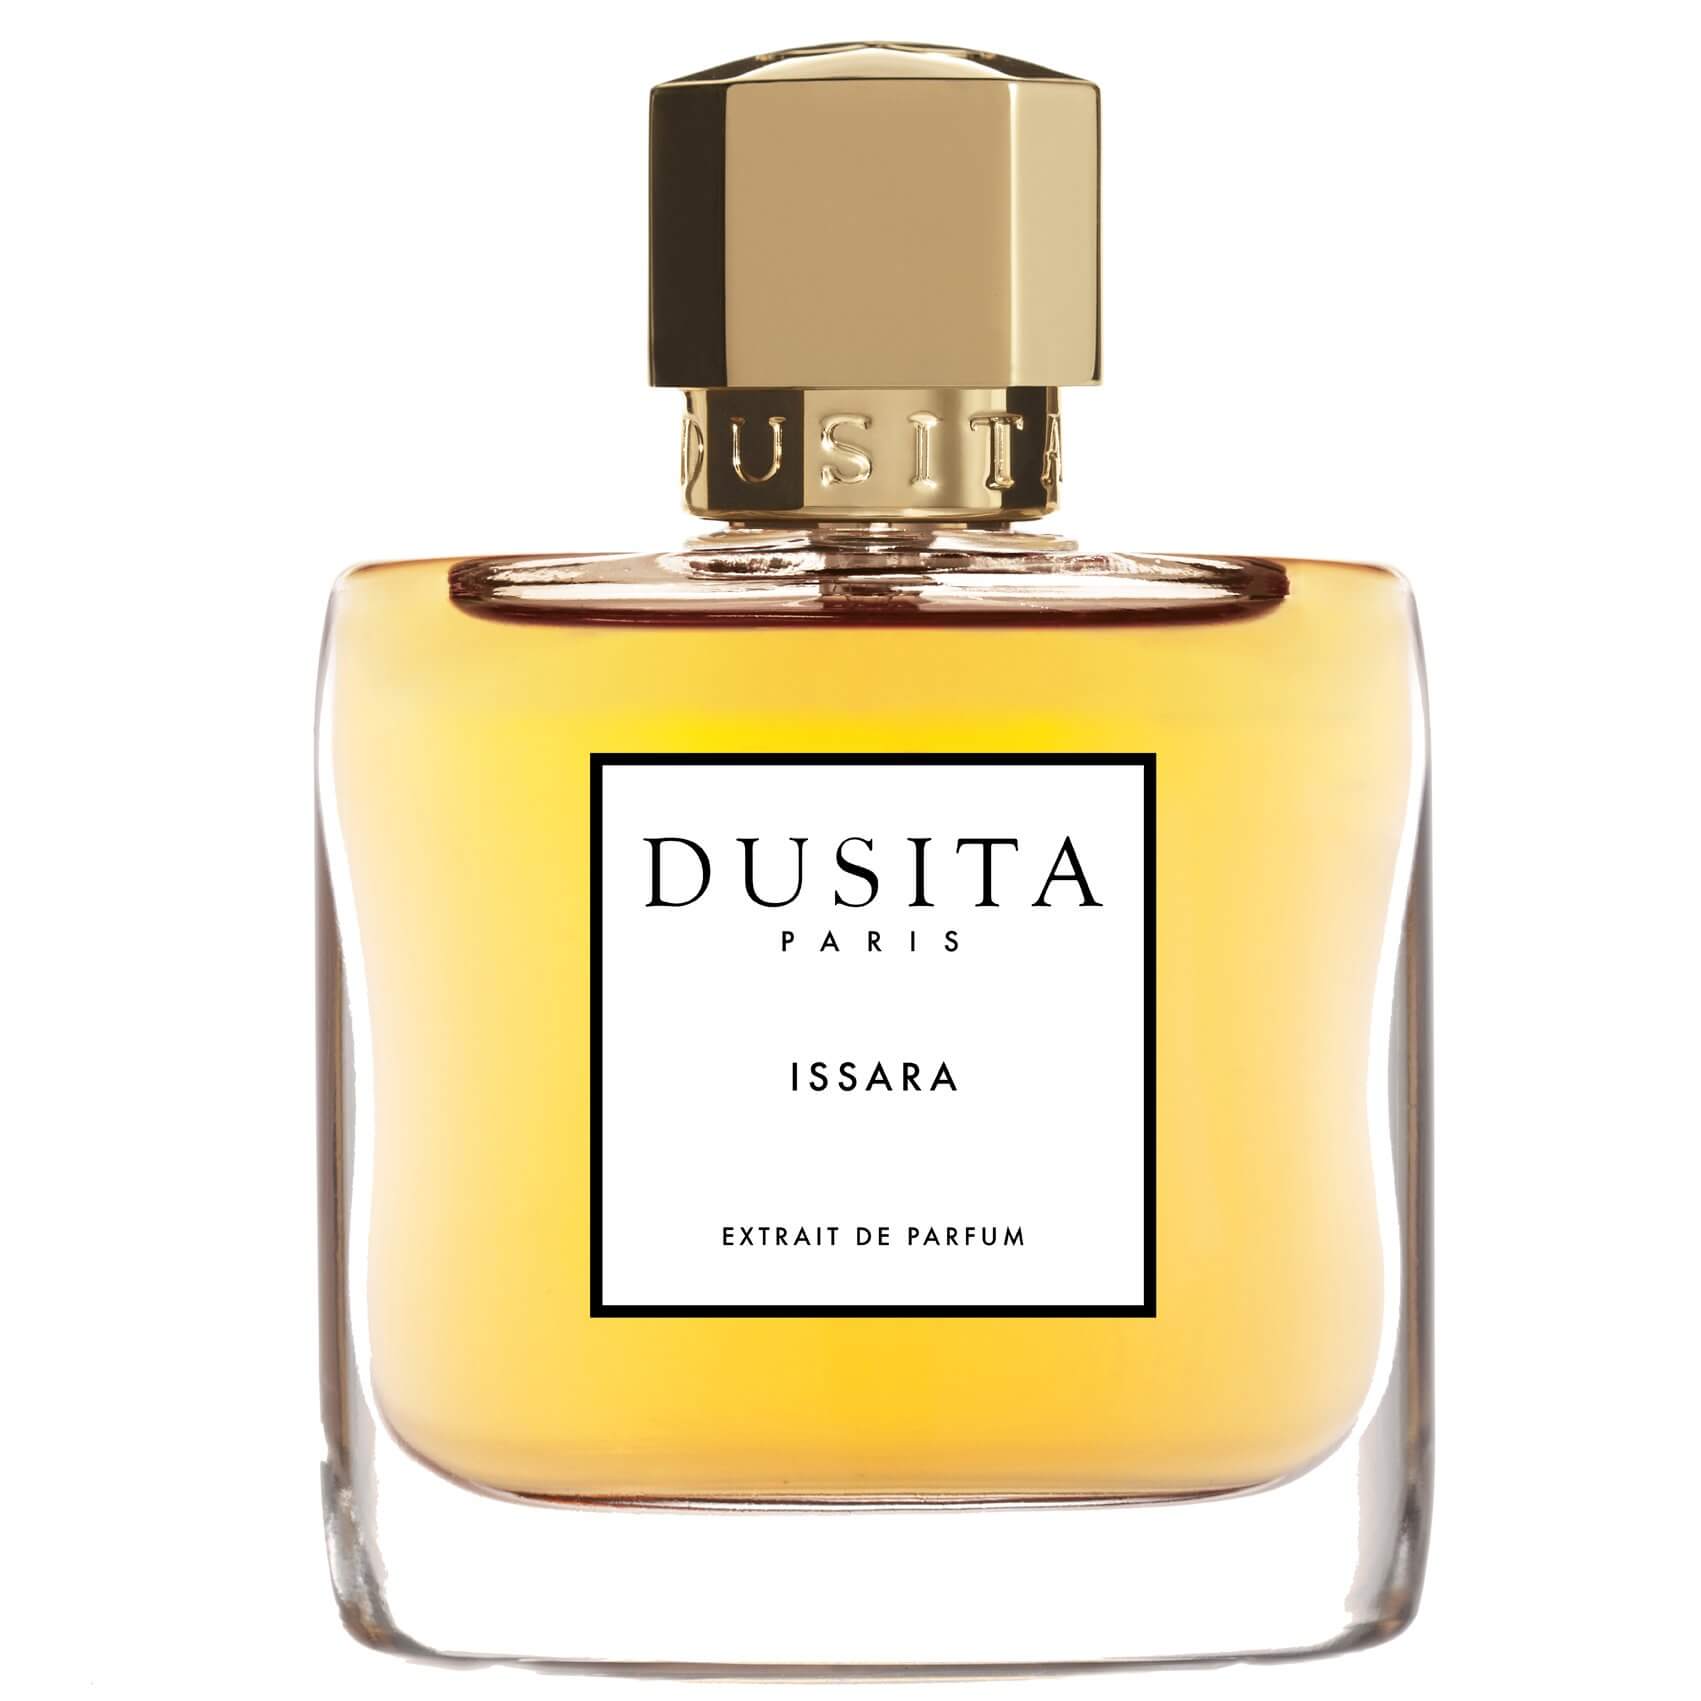 Issara by Dusita at Indigo Perfumery